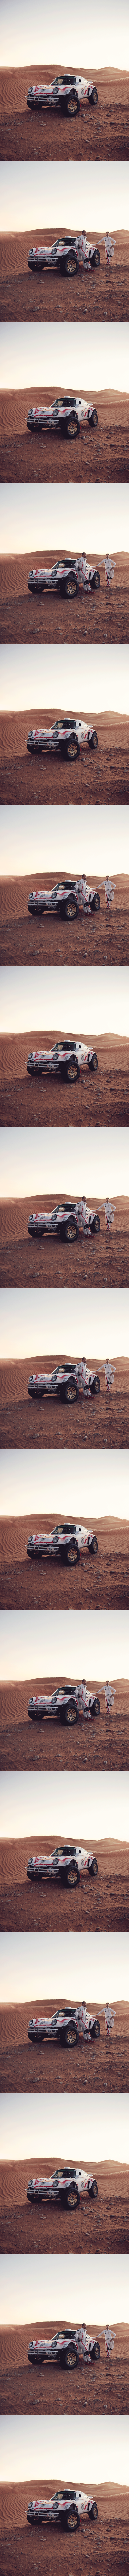 Road to Dakar #01 - Car&vintage